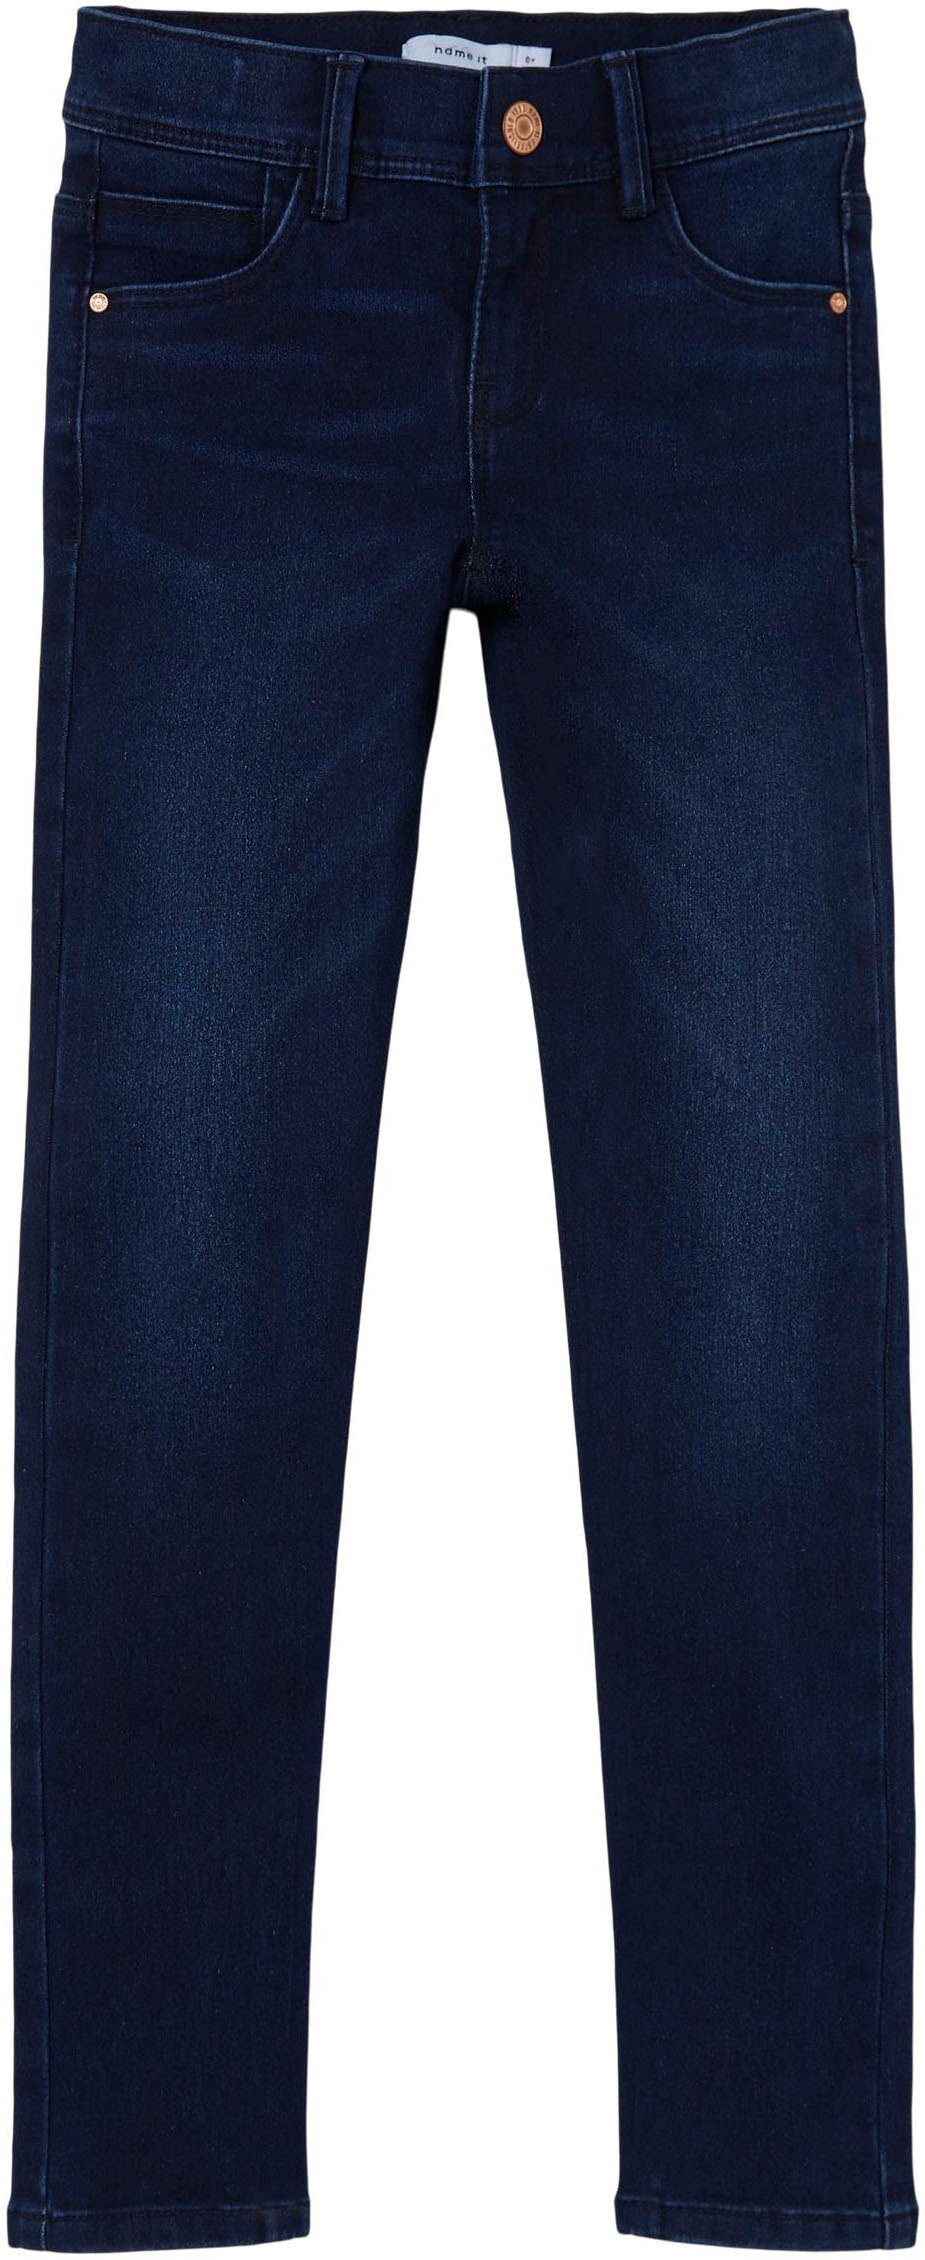 It DNMTAX bequemem Stretchdenim Stretch-Jeans denim blue Name aus PANT NKFPOLLY dark